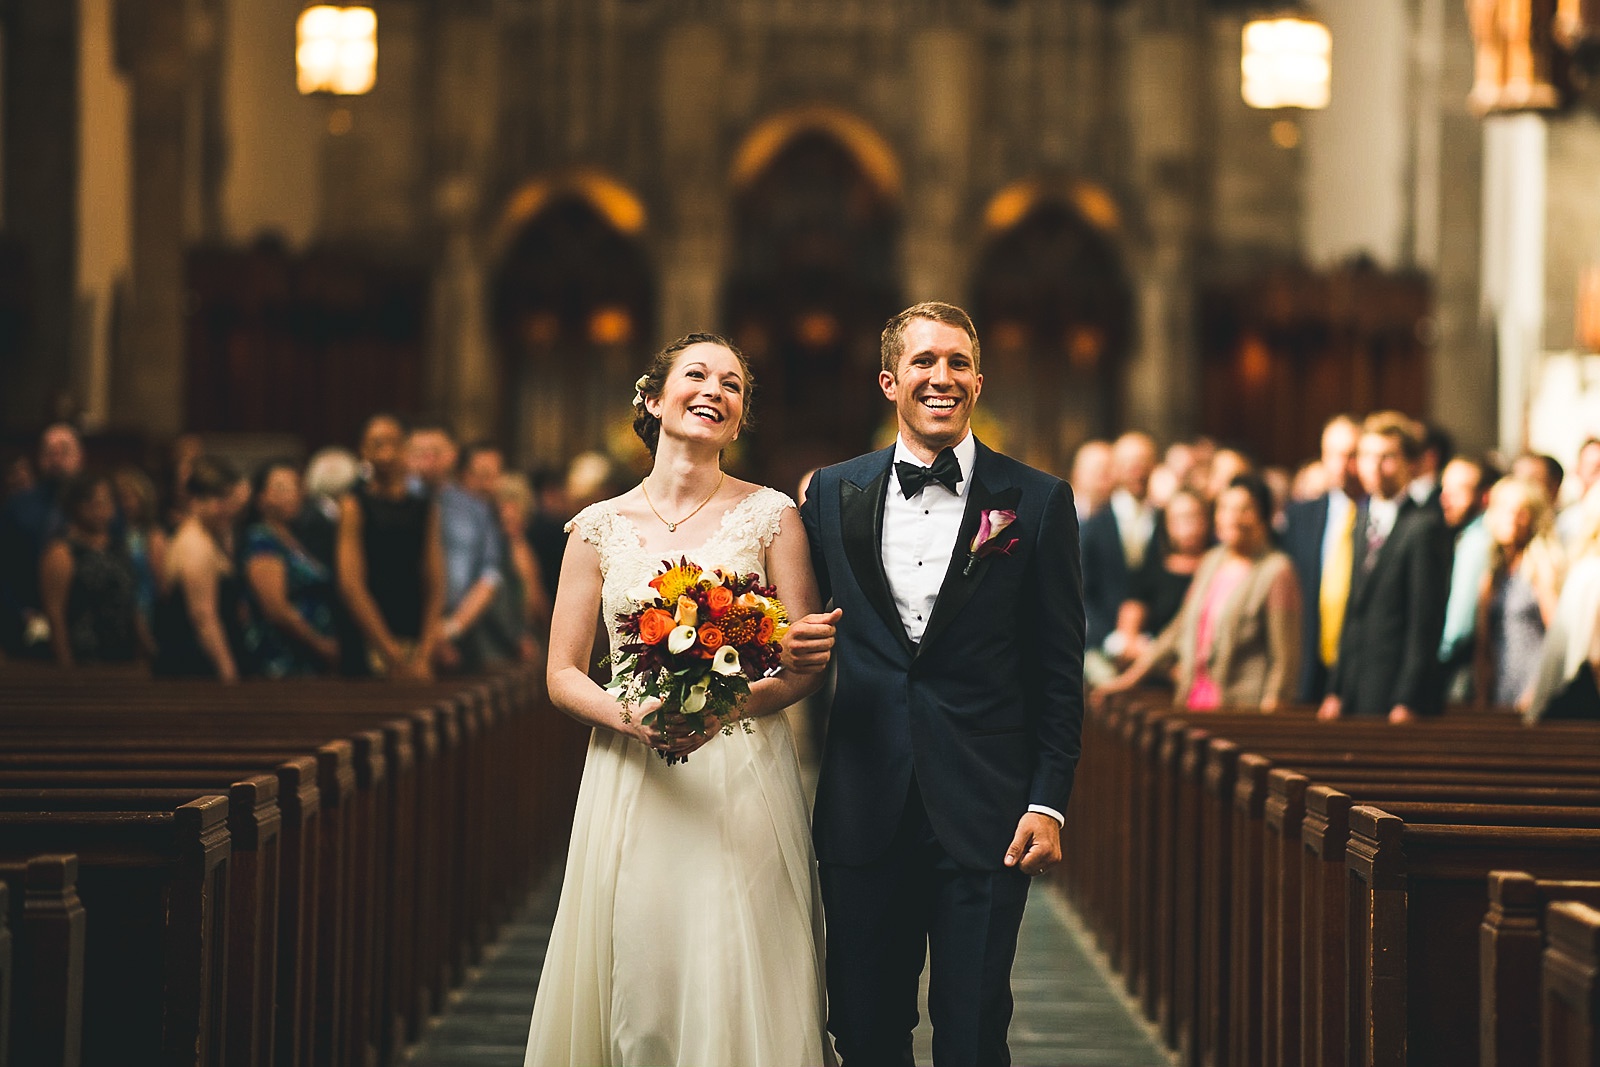 44 university of chicago rockefeller chapel married couple pics - University of Chicago Wedding Photos // Annemarie + Zach